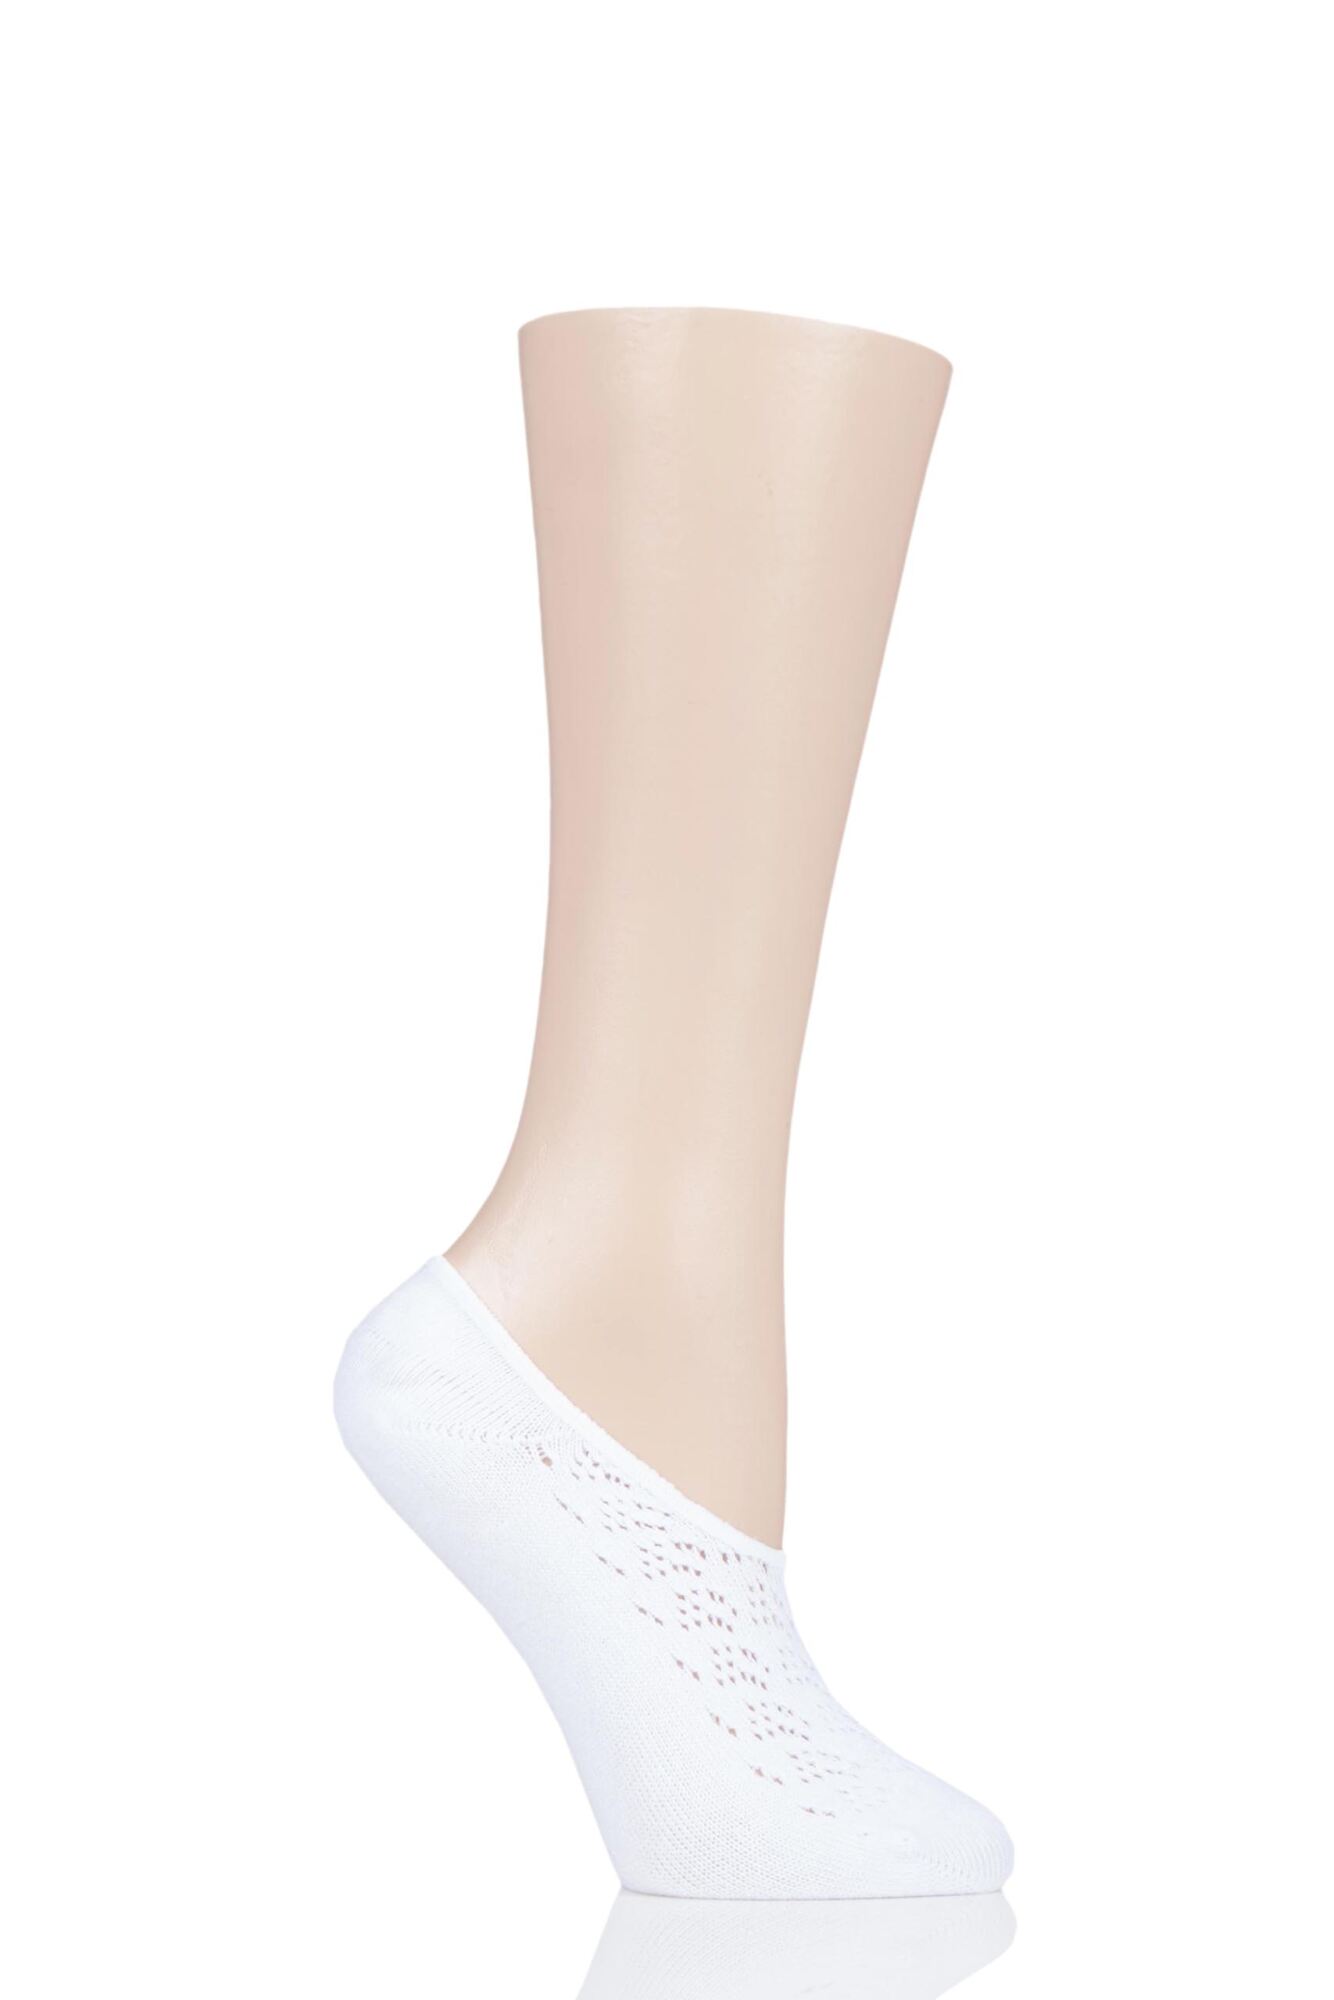 1 Pair Grace Organic Cotton Casual Patterned Trainer Socks Ladies - Tavi Noir